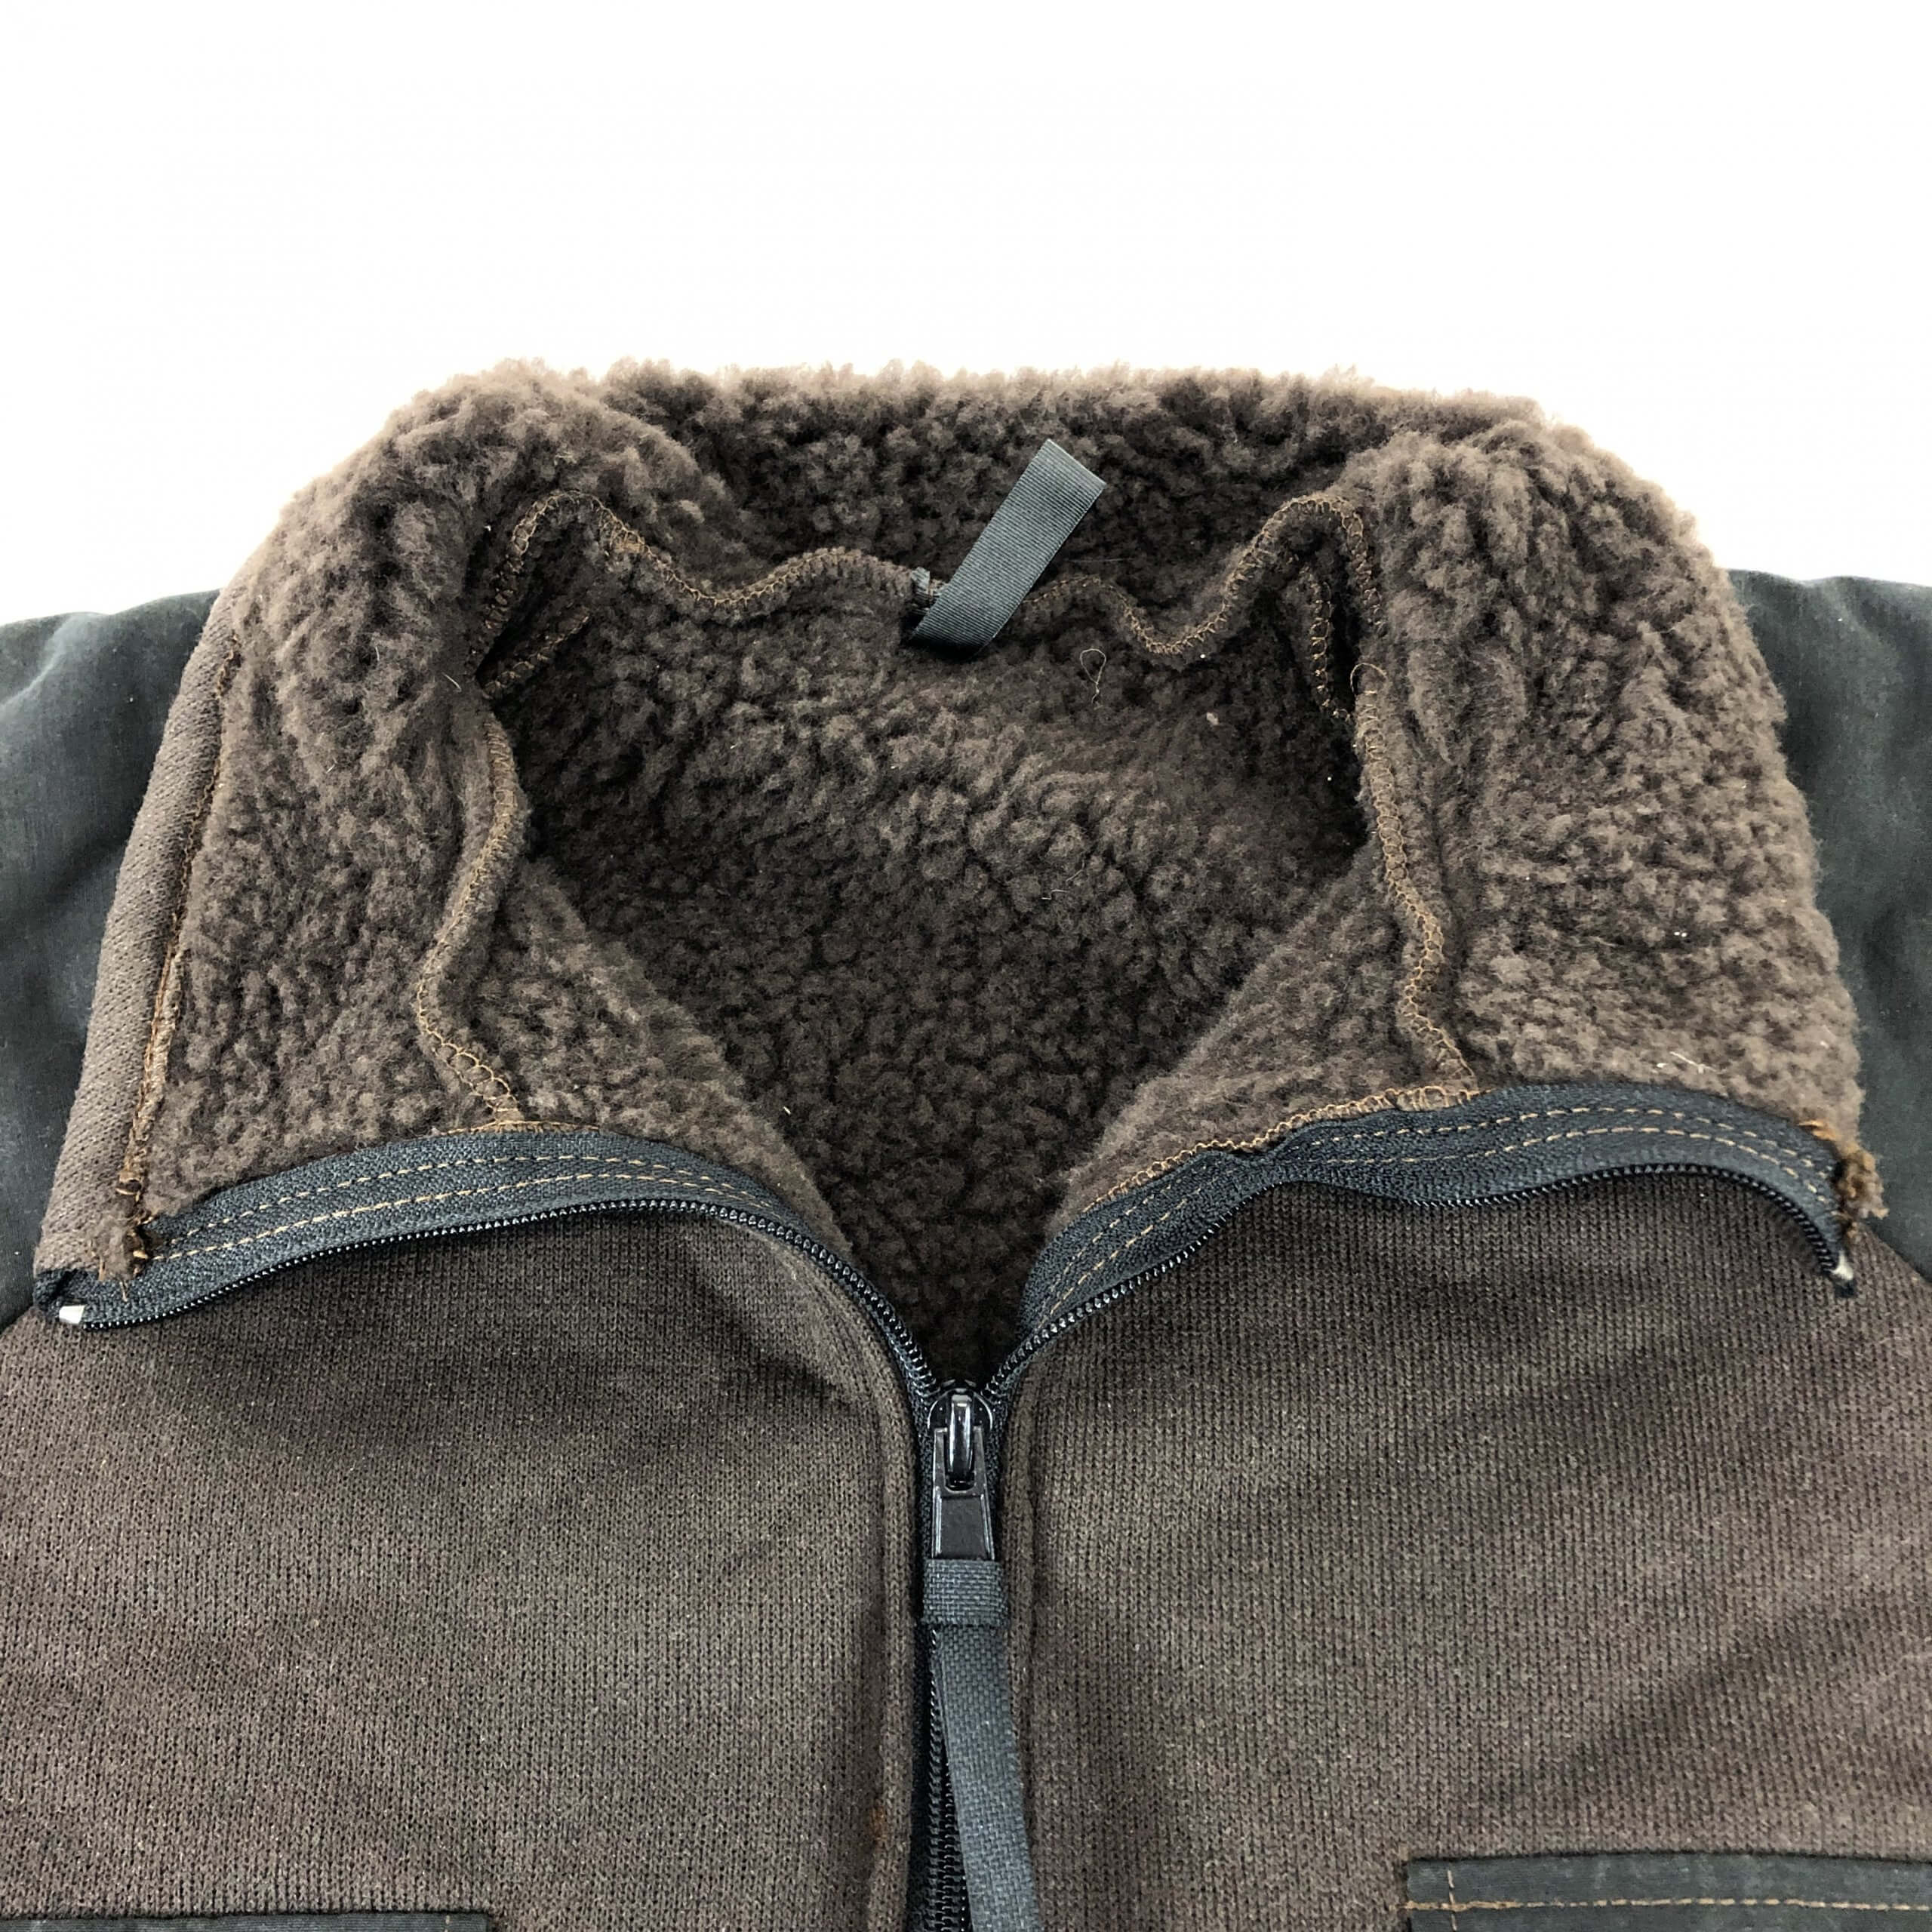 USGI Cold Weather Jacket, Bear Suit [Genuine Issue]